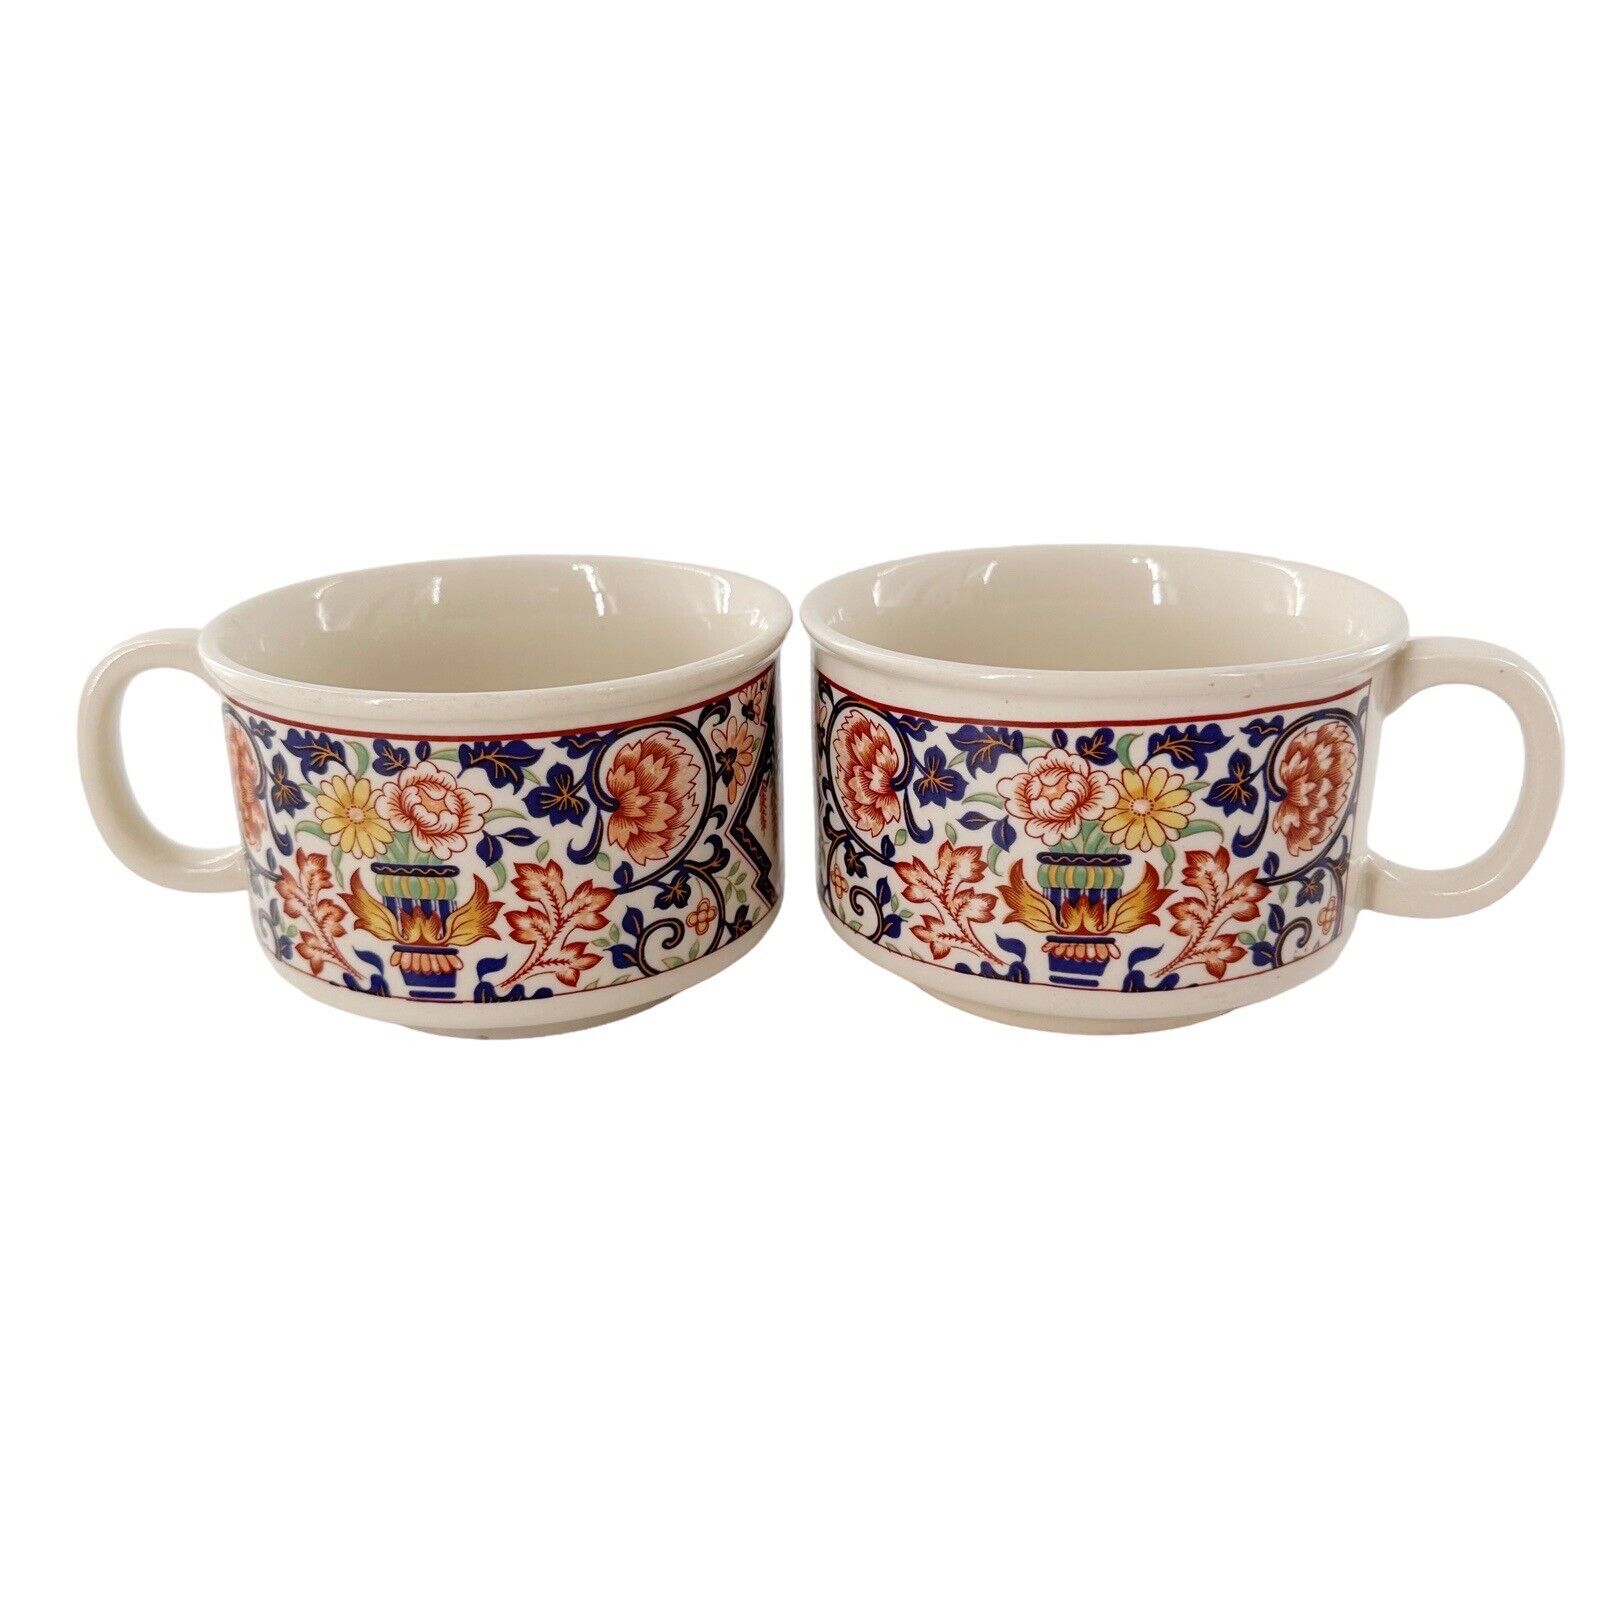 2x Starcraft Soup Bowls Vintage handles Japan MCM Coffee Cup Mug Pottery Tuscan